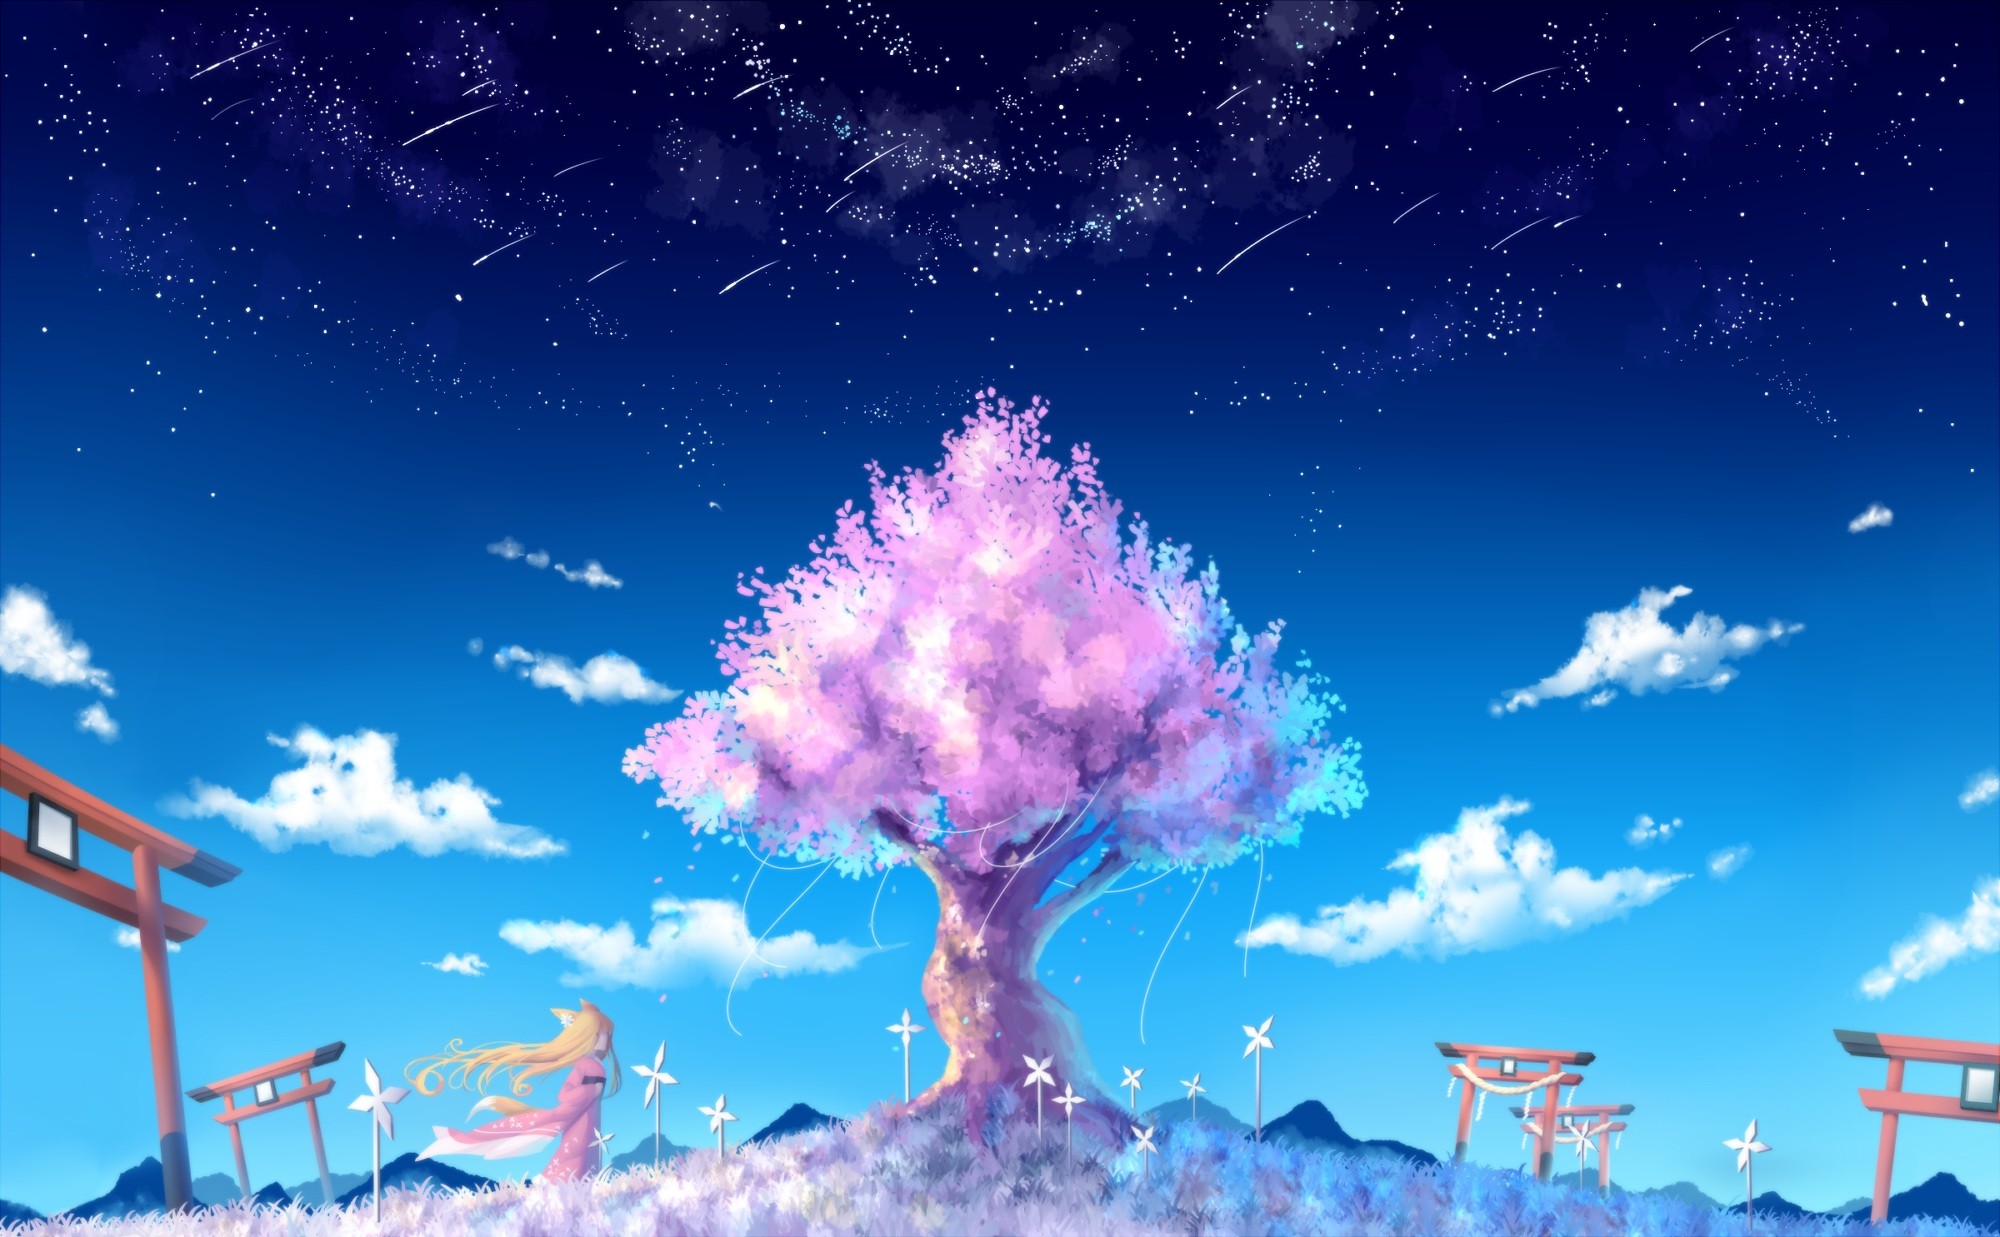 Anime 2000x1237 anime artwork fantasy art sky stars trees anime girls Asia clouds